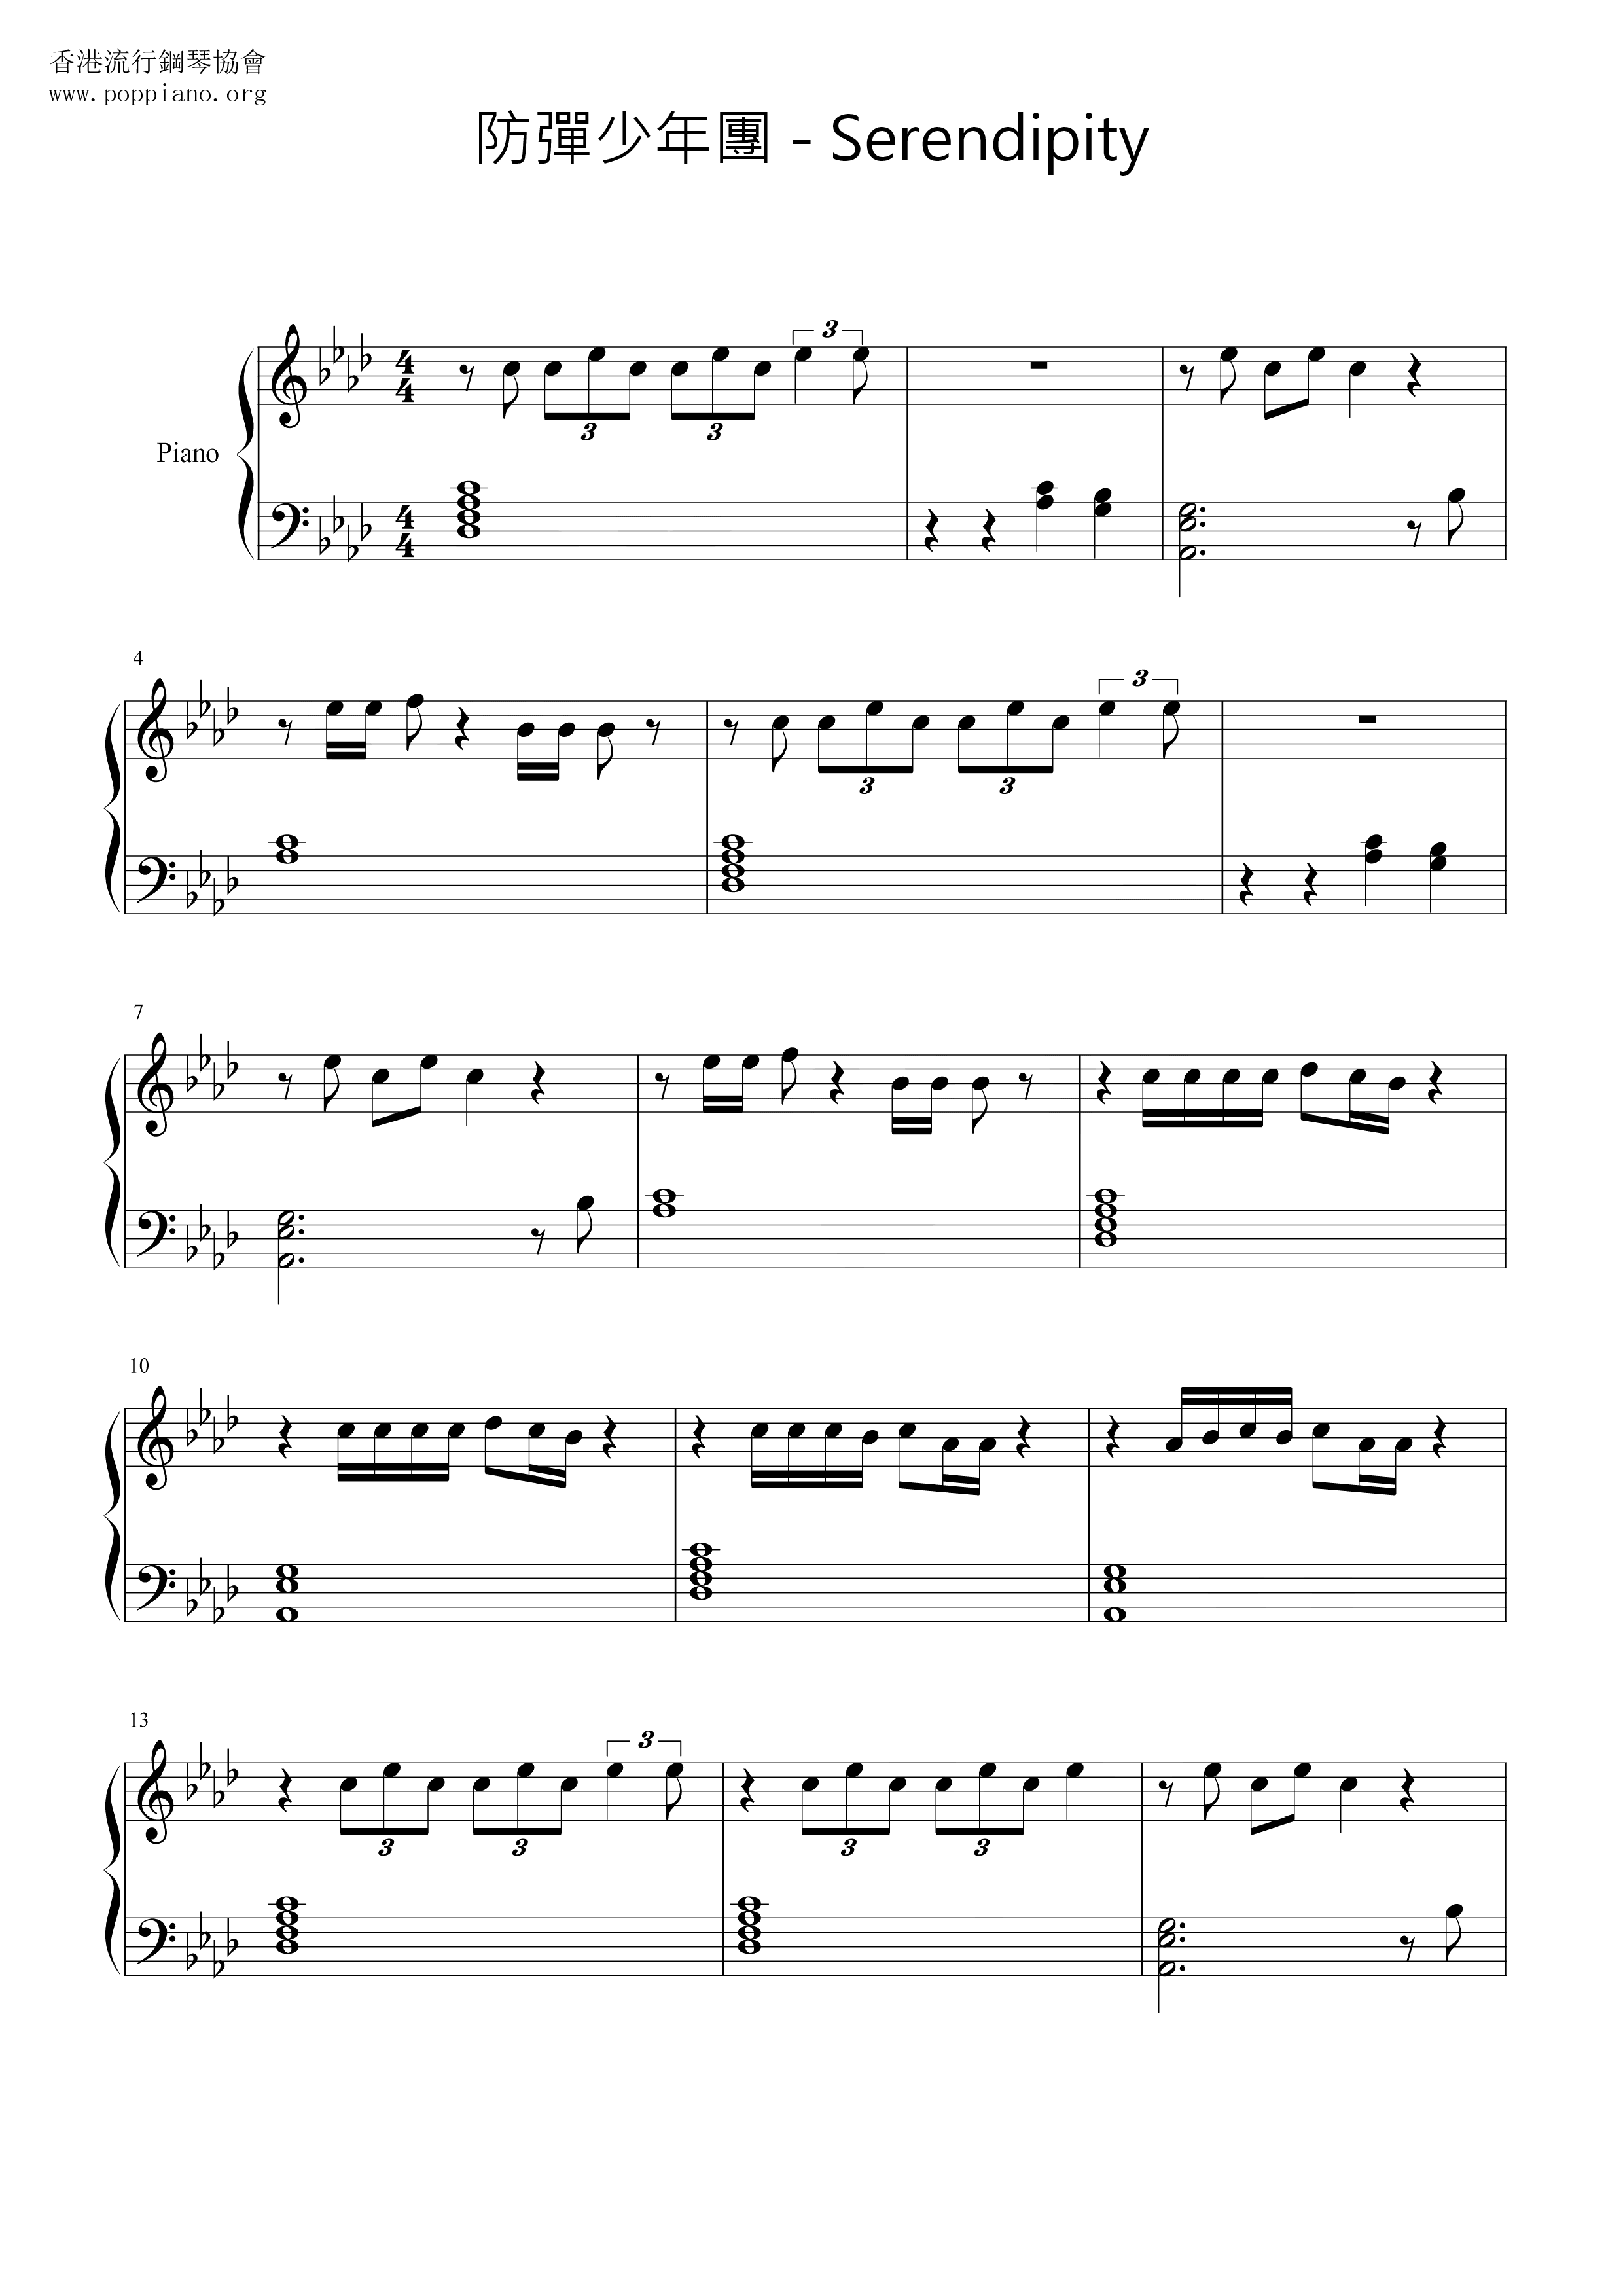 Serendipityピアノ譜